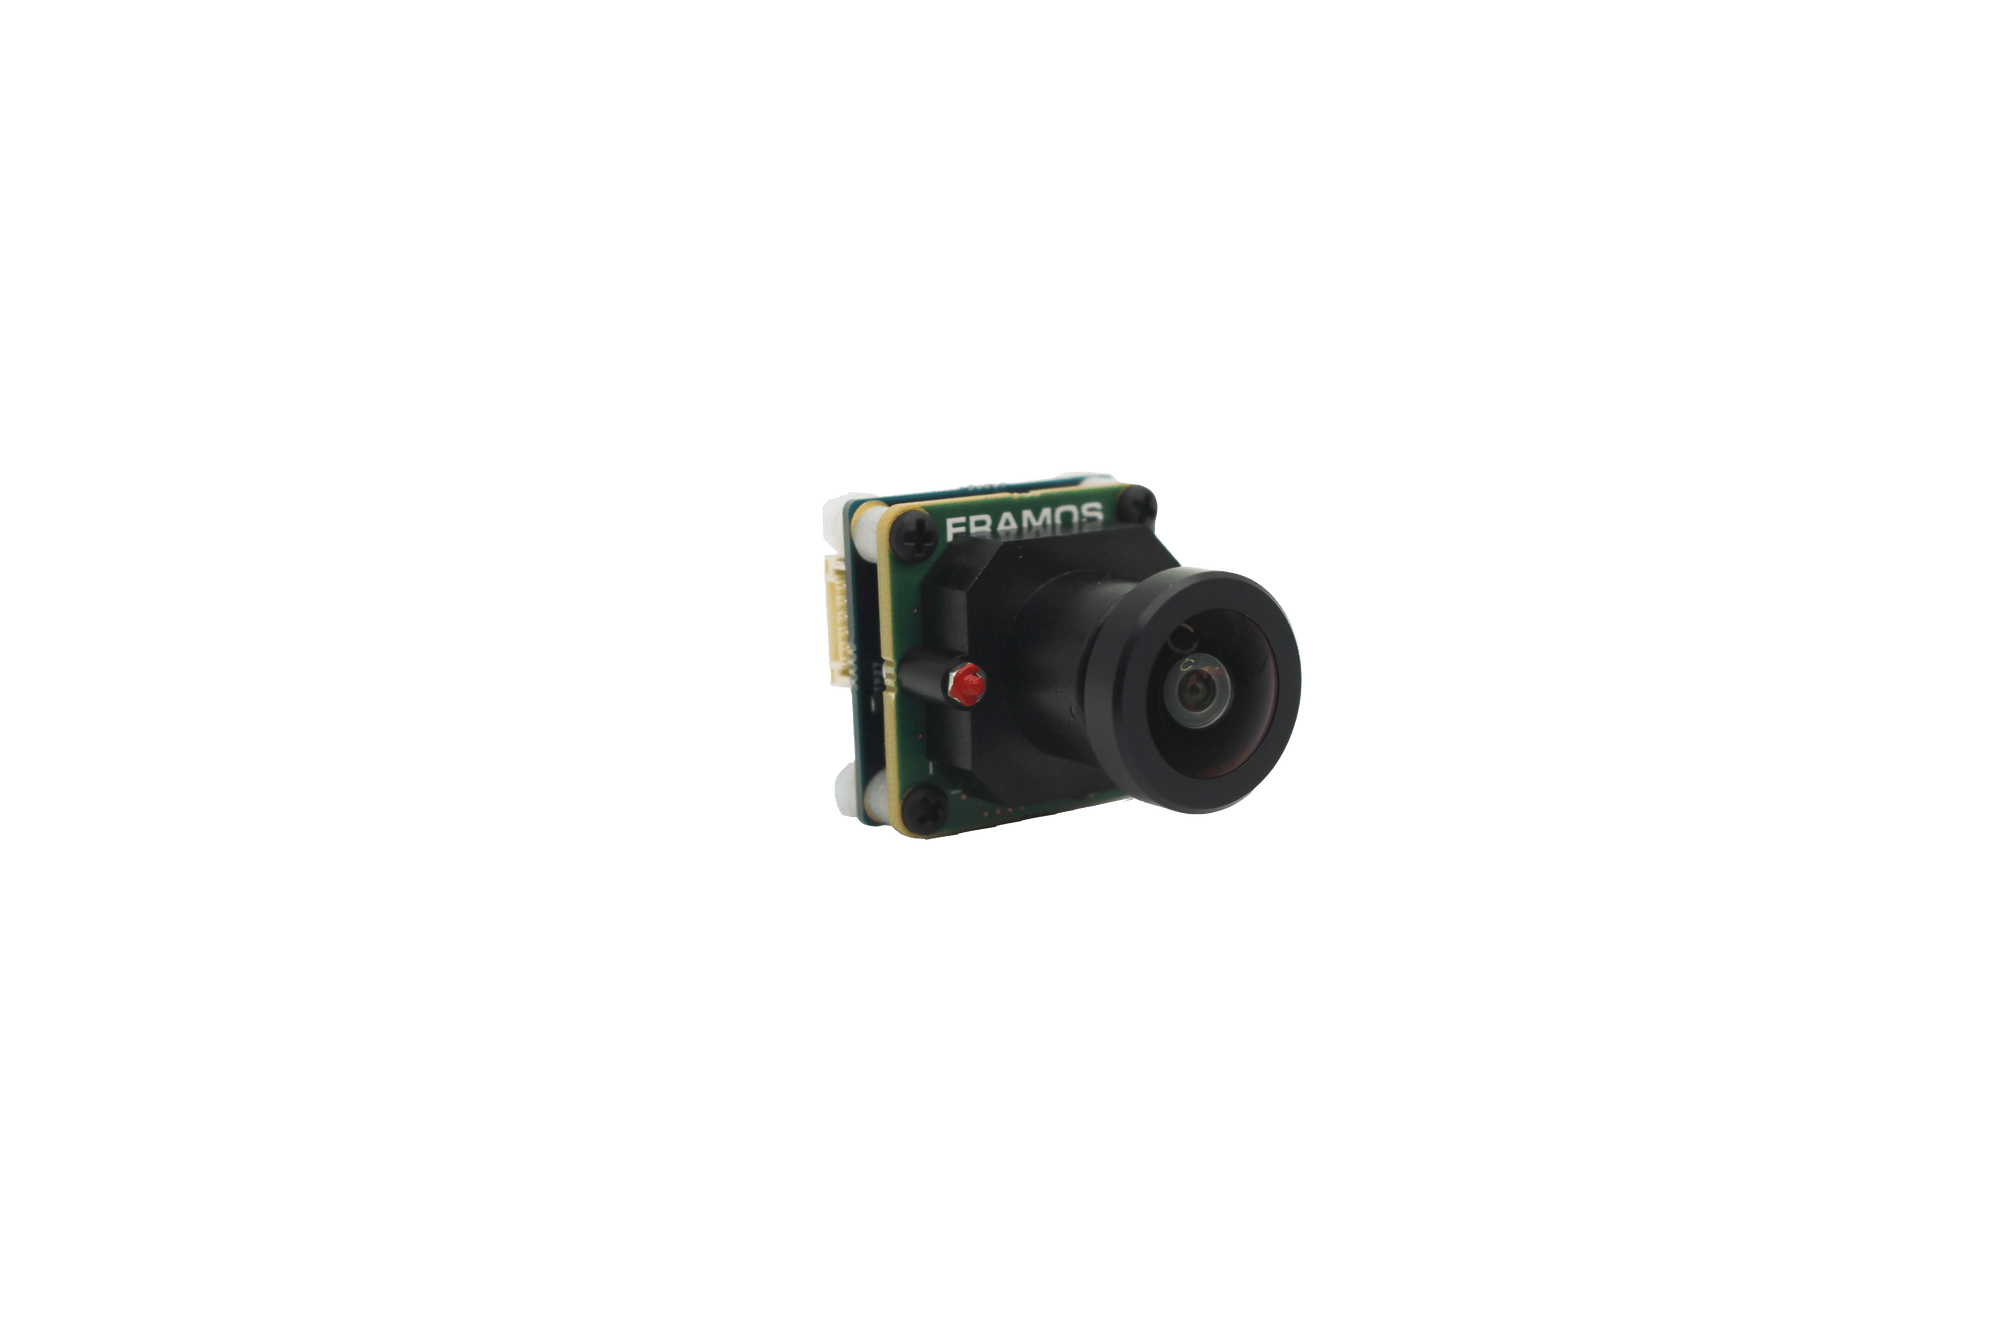 ModalAI, Inc. Accessory 4k High-resolution, Low-light Sensor for VOXL® 2 (Starvis IMX678 w/ M12-style Lens)